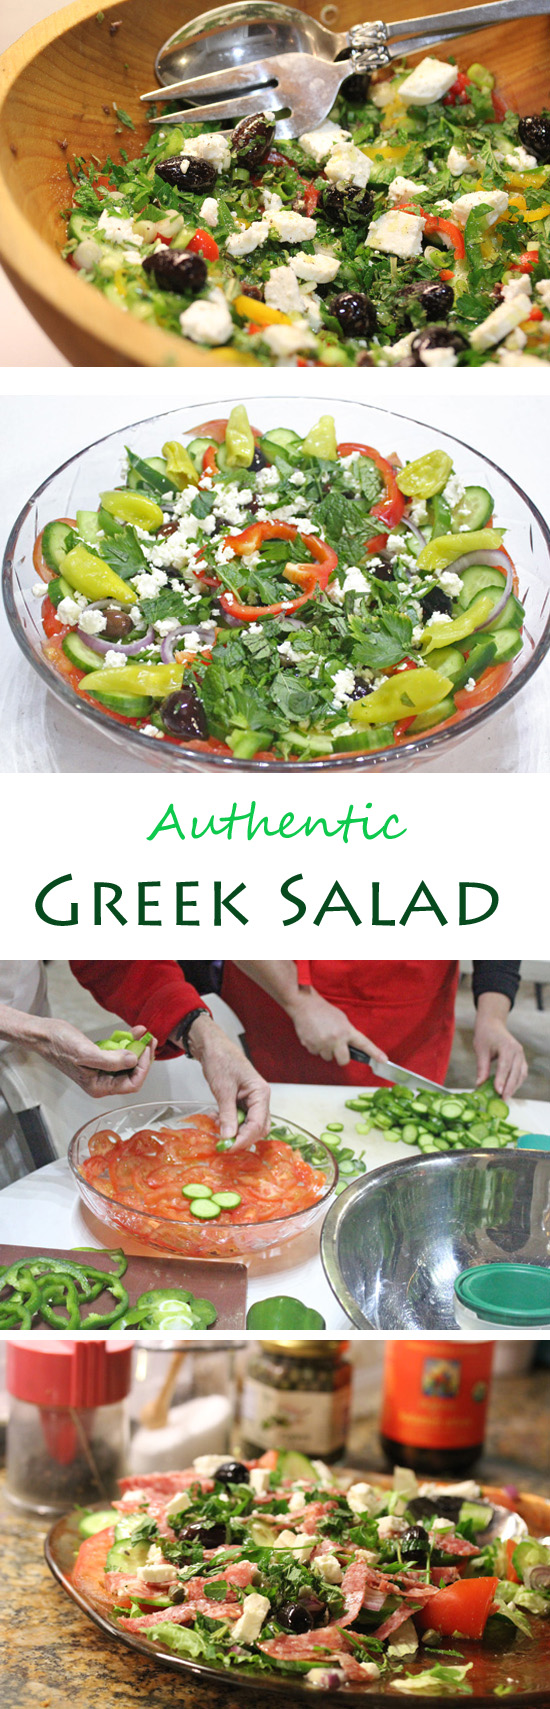 Greek Salad - Pinterest 2-16